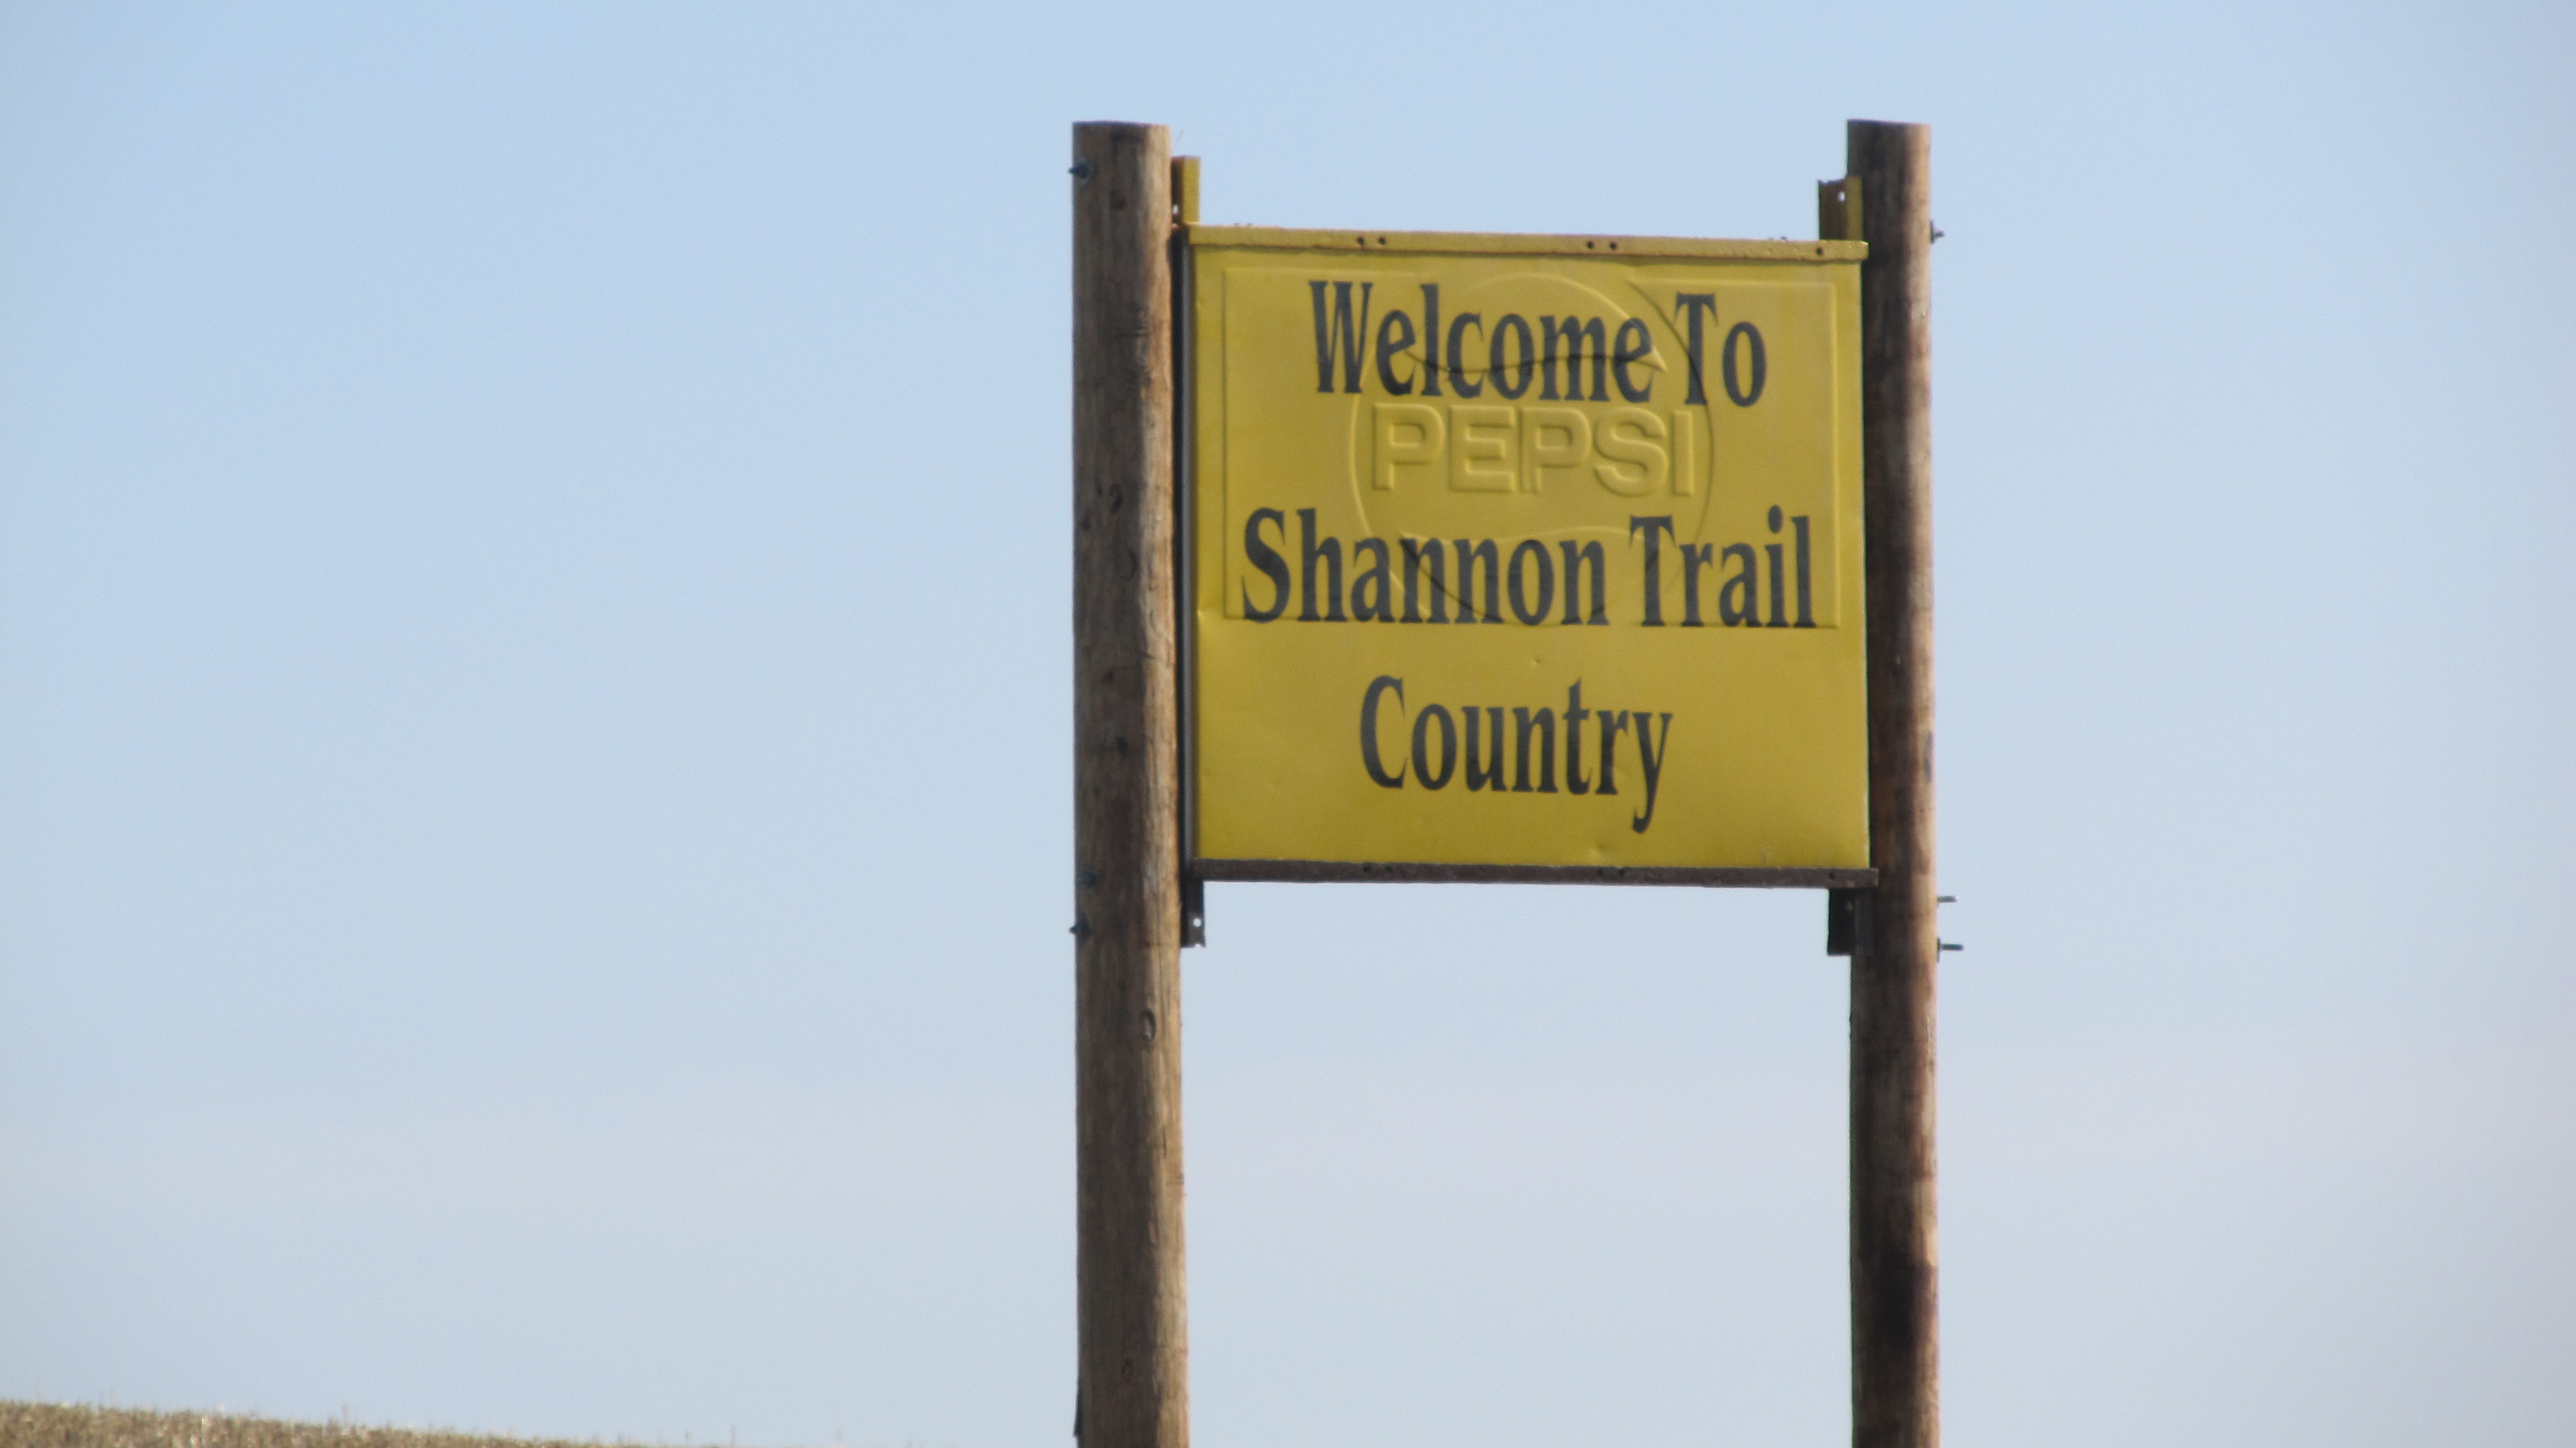 Shannon Trail